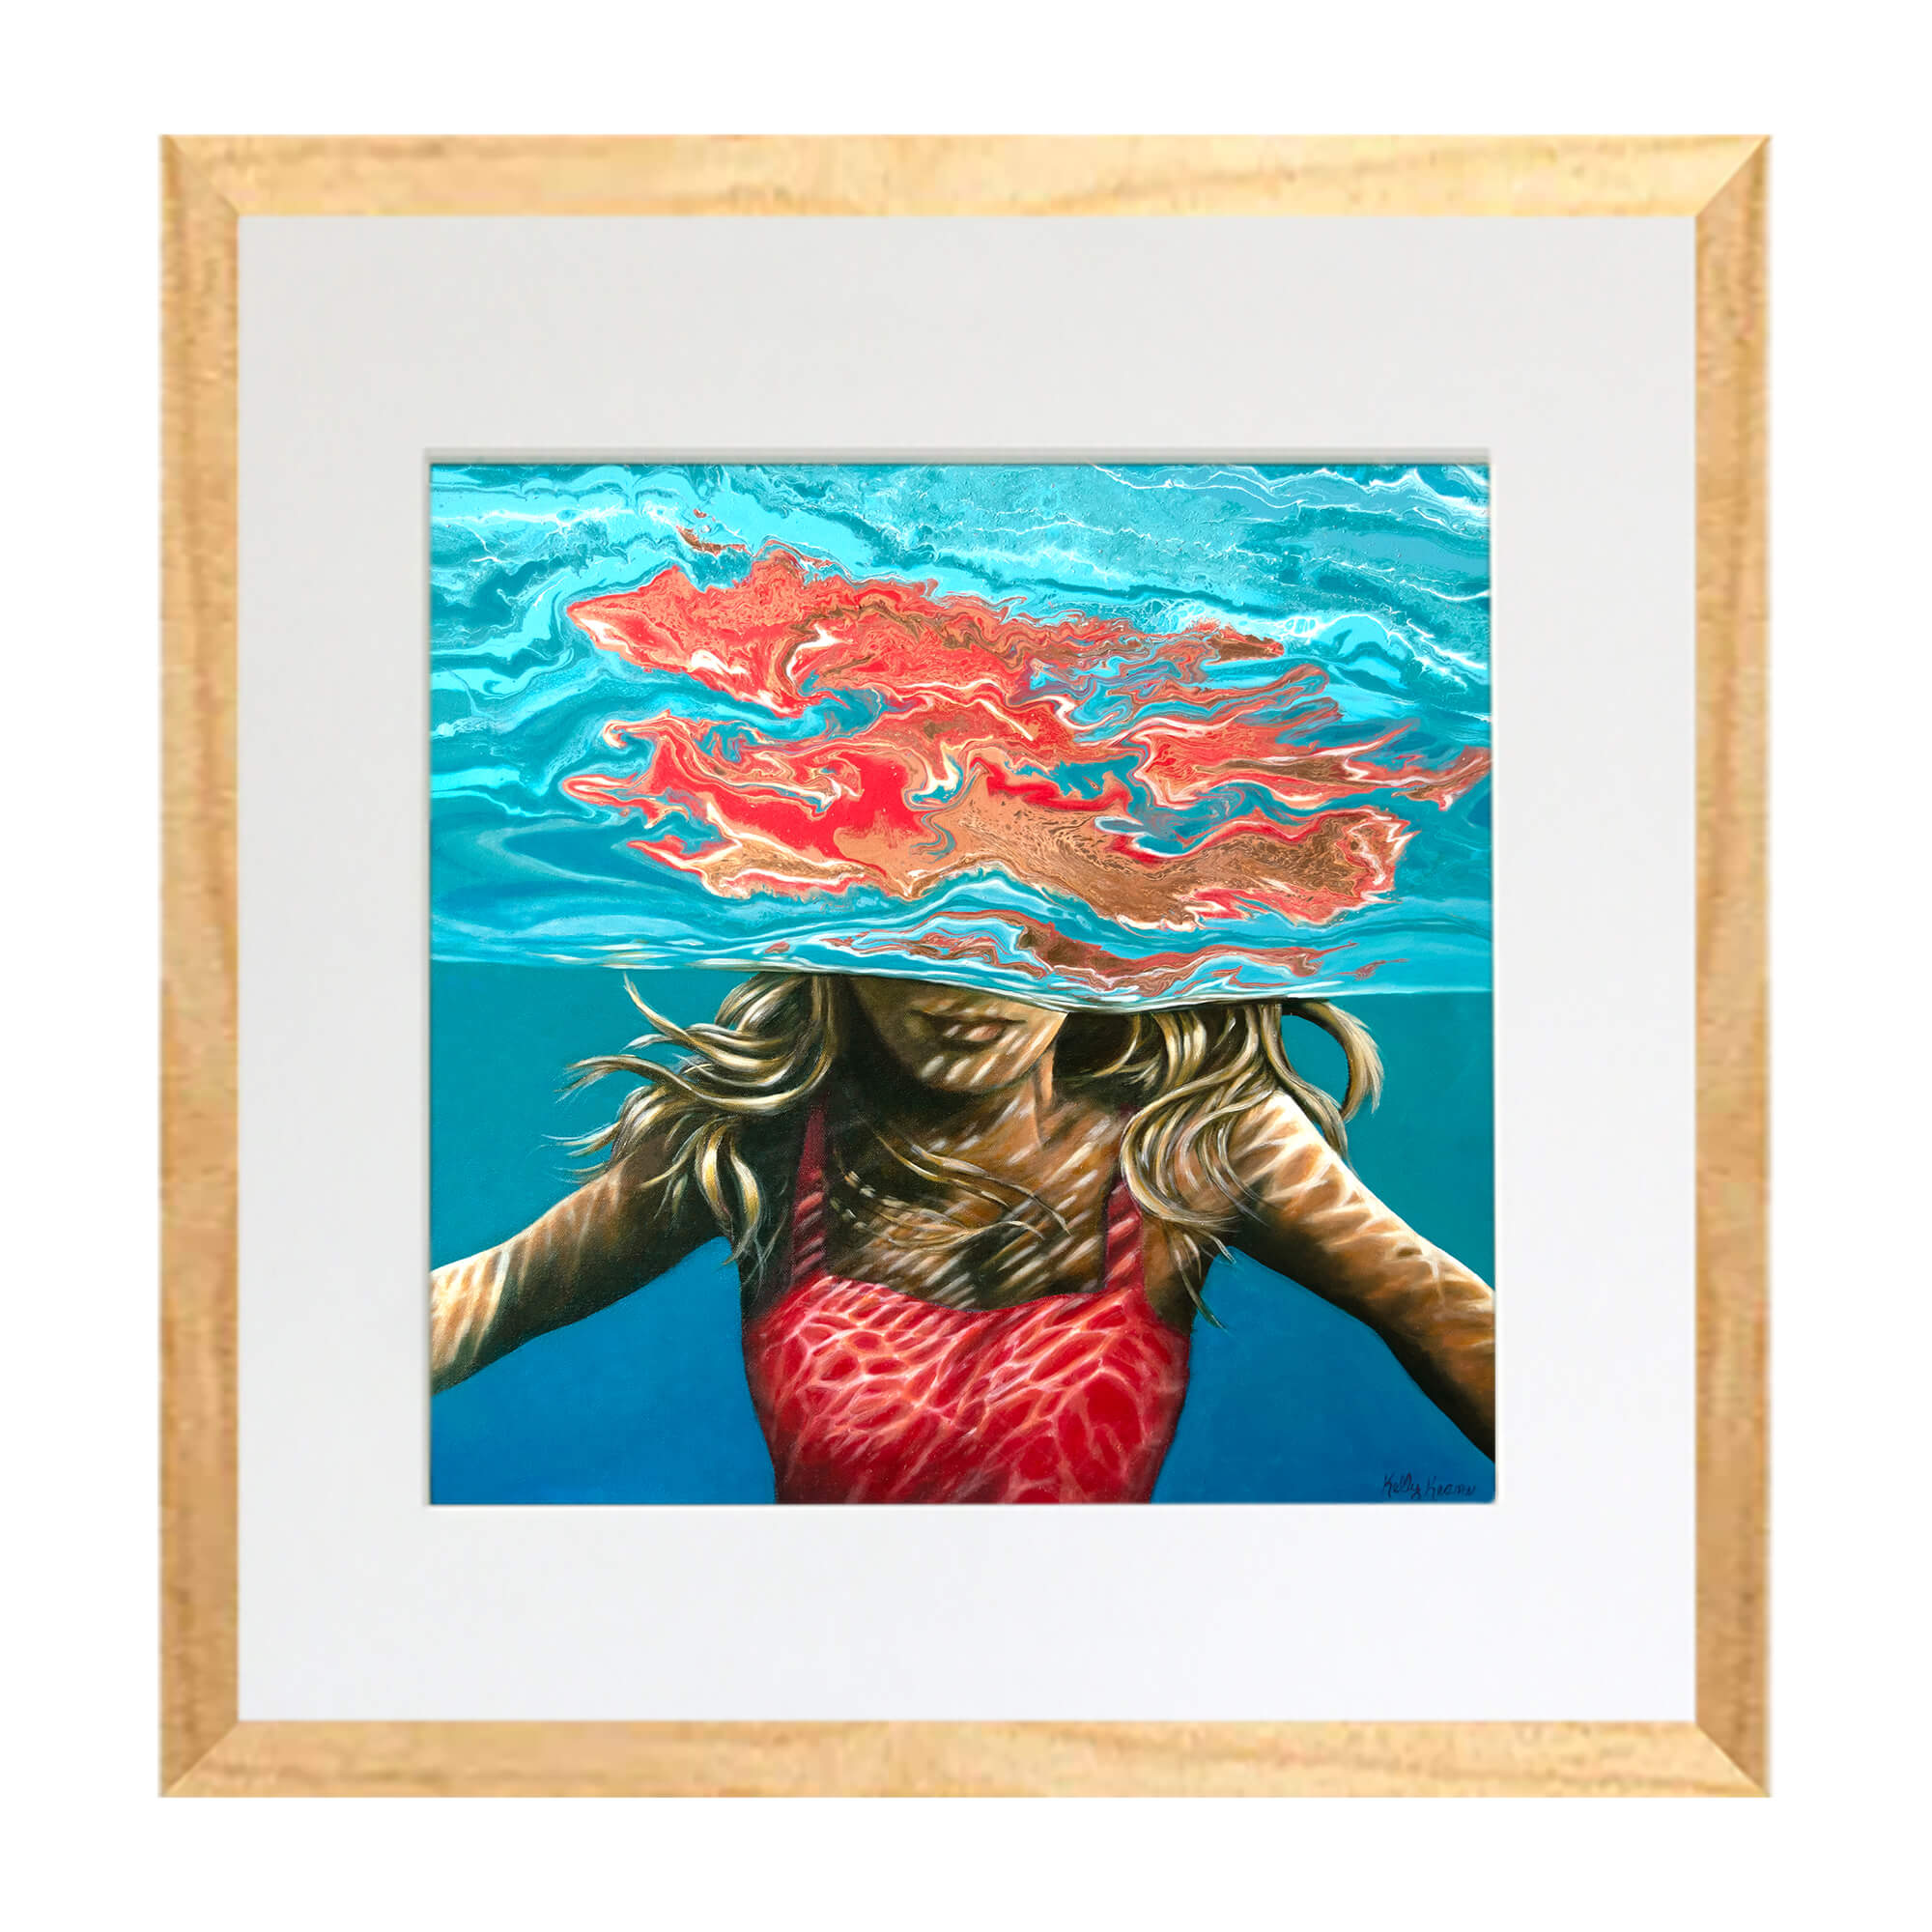 Matted art print with wood frame showcasing blonde woman underwater  by hawaii artist Kelly Keane